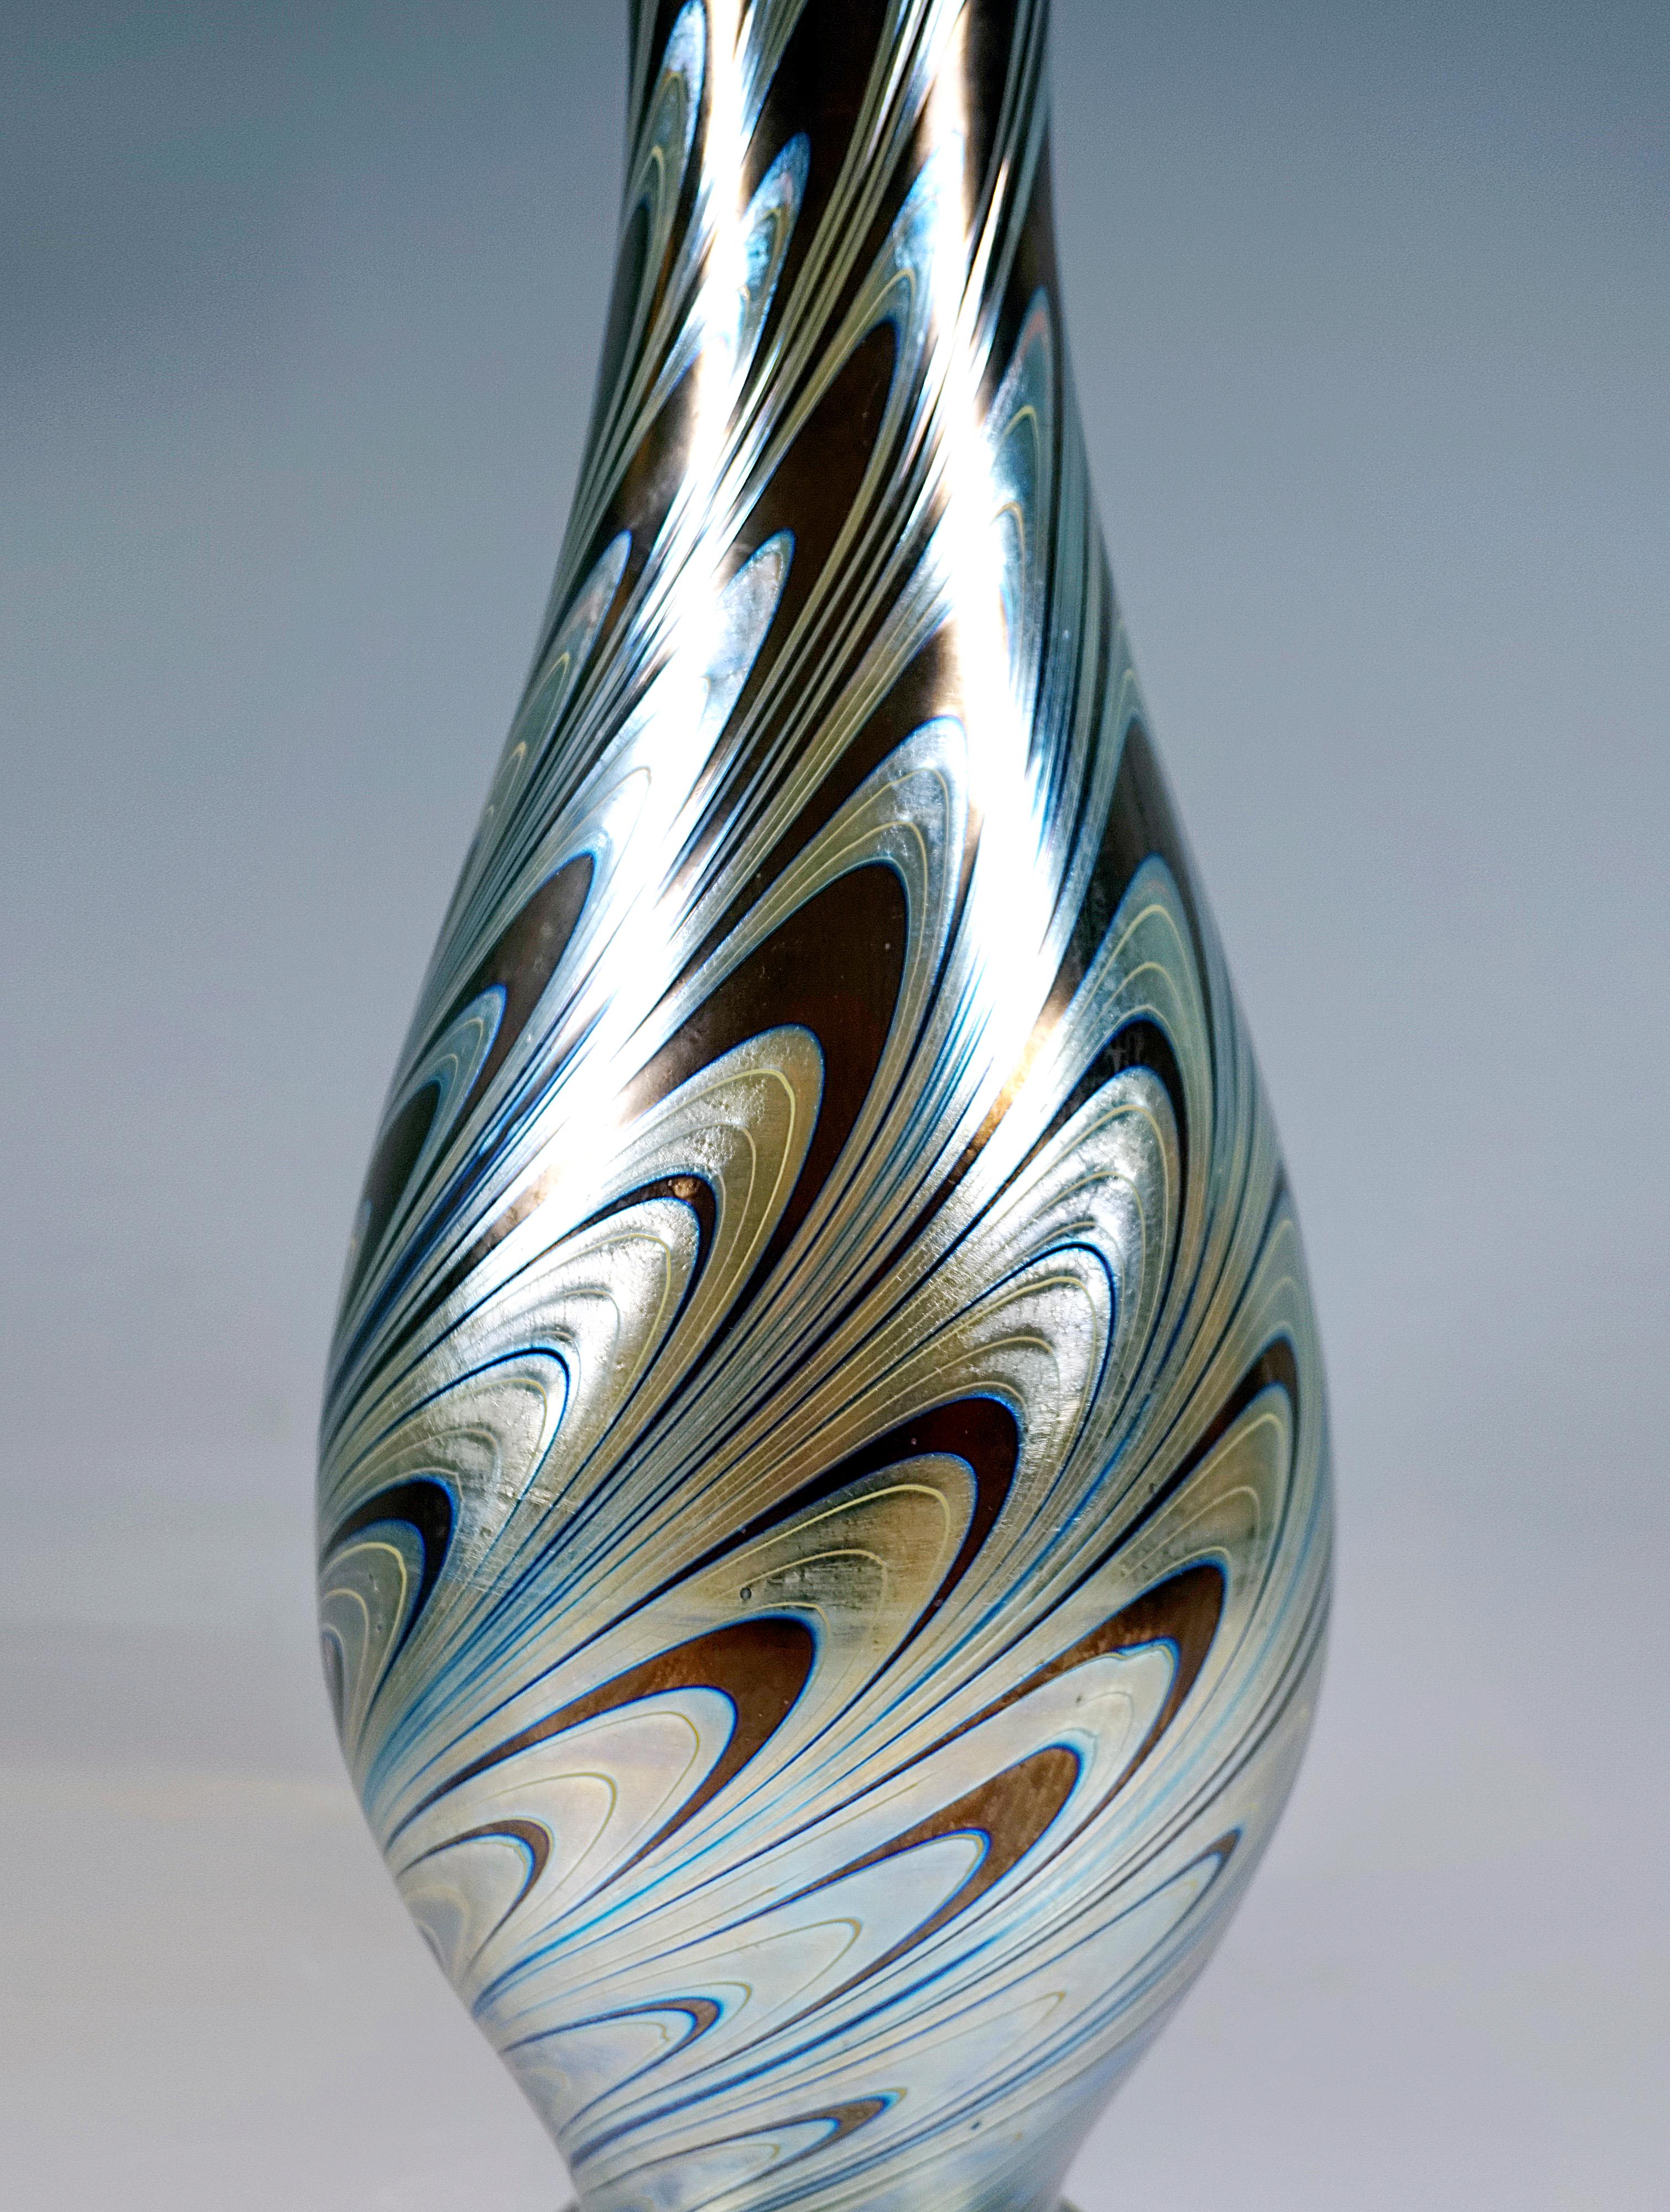 Glass Large Loetz Art Nouveau Vase, Ruby Phenomenon Gre 7624, Austria-Hungary, Ca 1898 For Sale